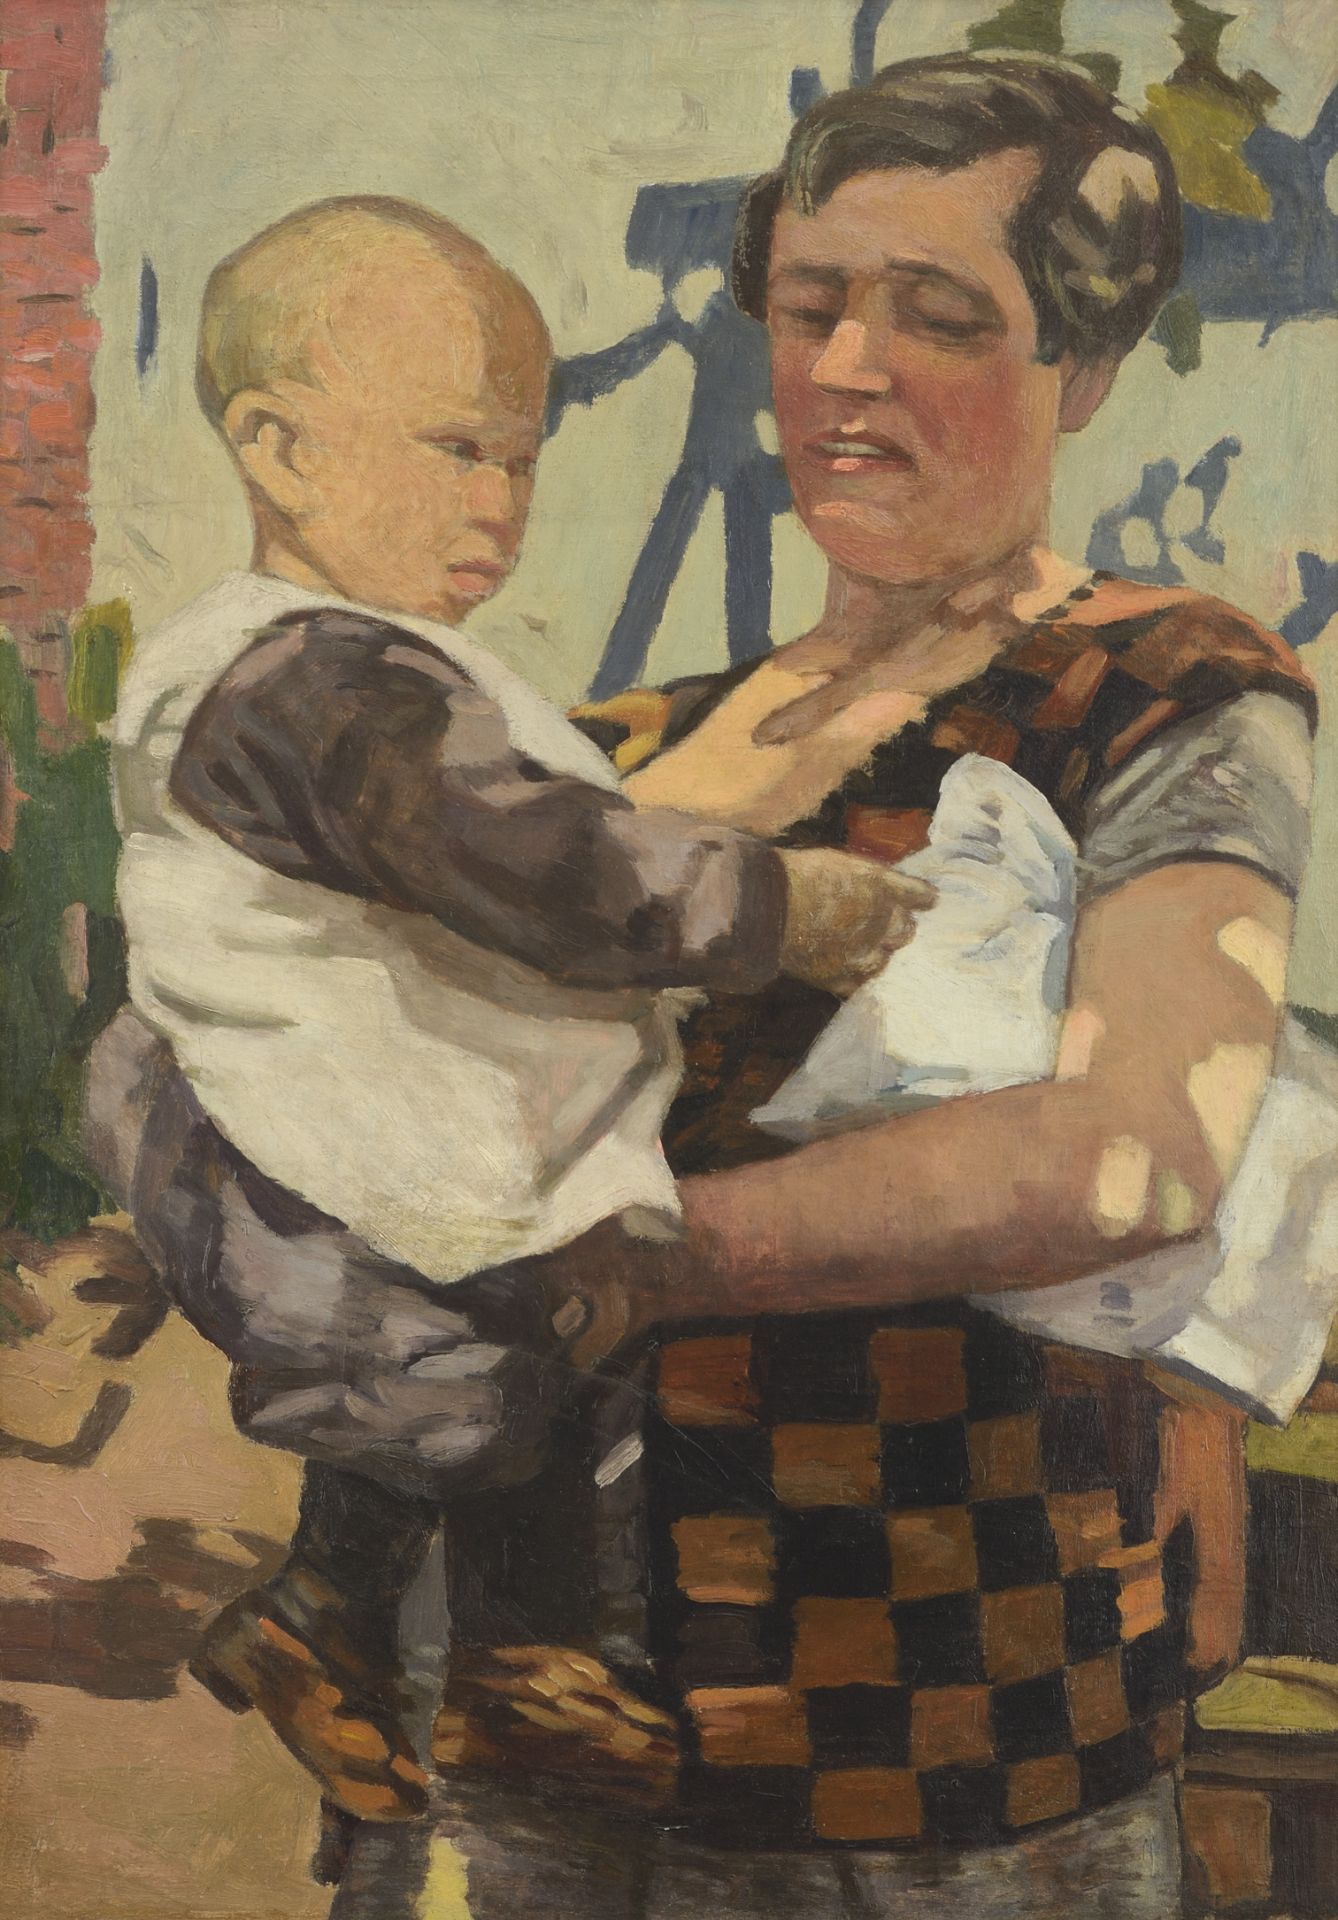 Ganyu Ivanov Koichev /1887-1951/ "Mother with a child"